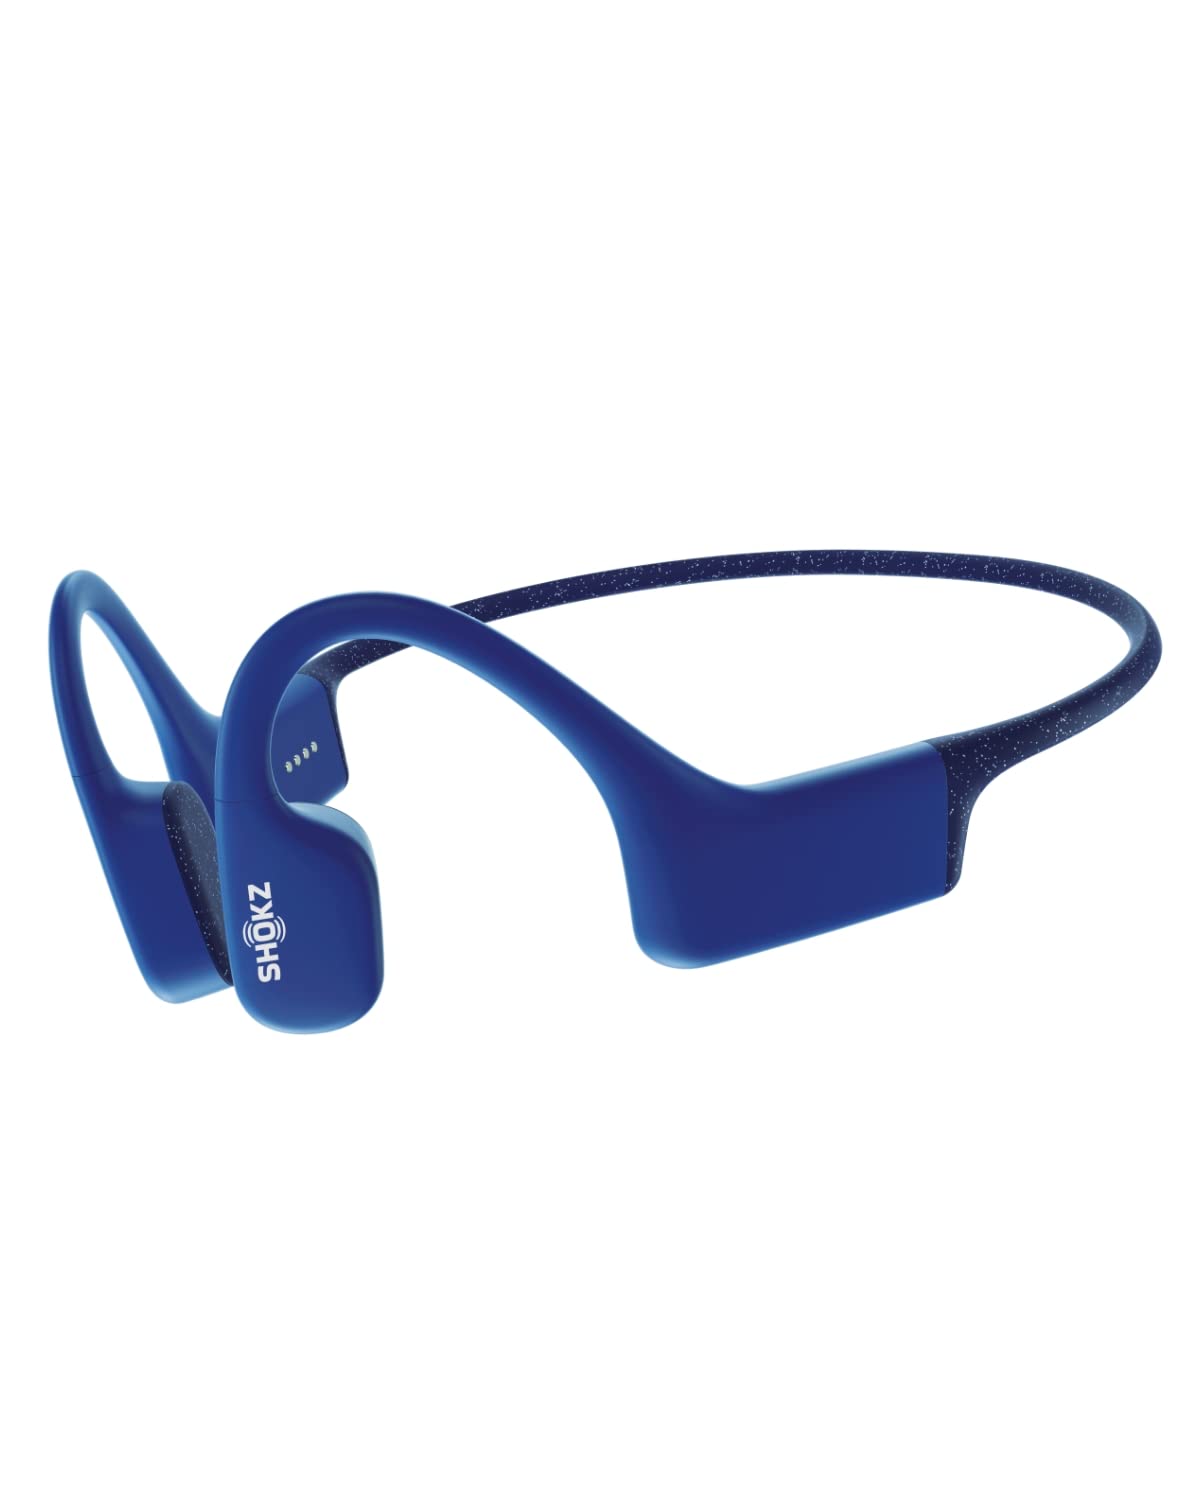 SHOKZ OpenSwim - Bone Conduction MP3 Waterproof Headphones for Swimming - Open-Ear Wireless Headphones, with Nose Clip and Earplug (Blue)